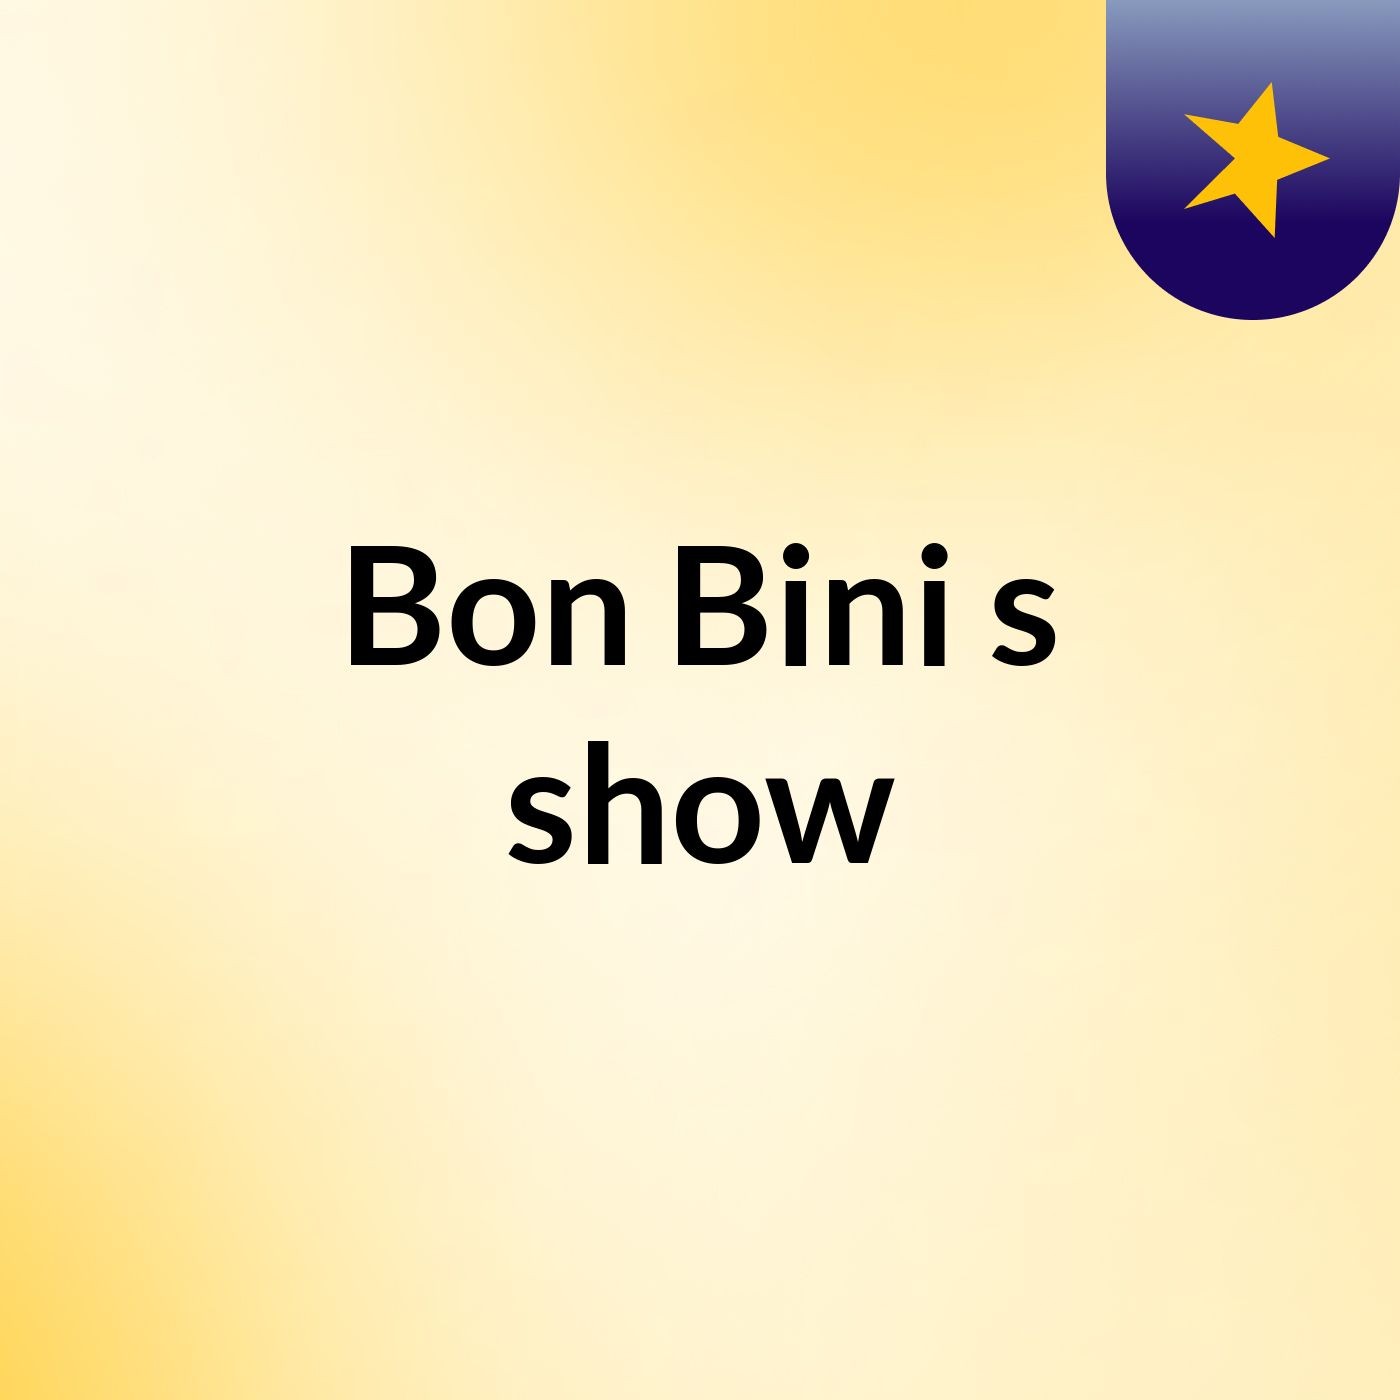 Bon Bini's show